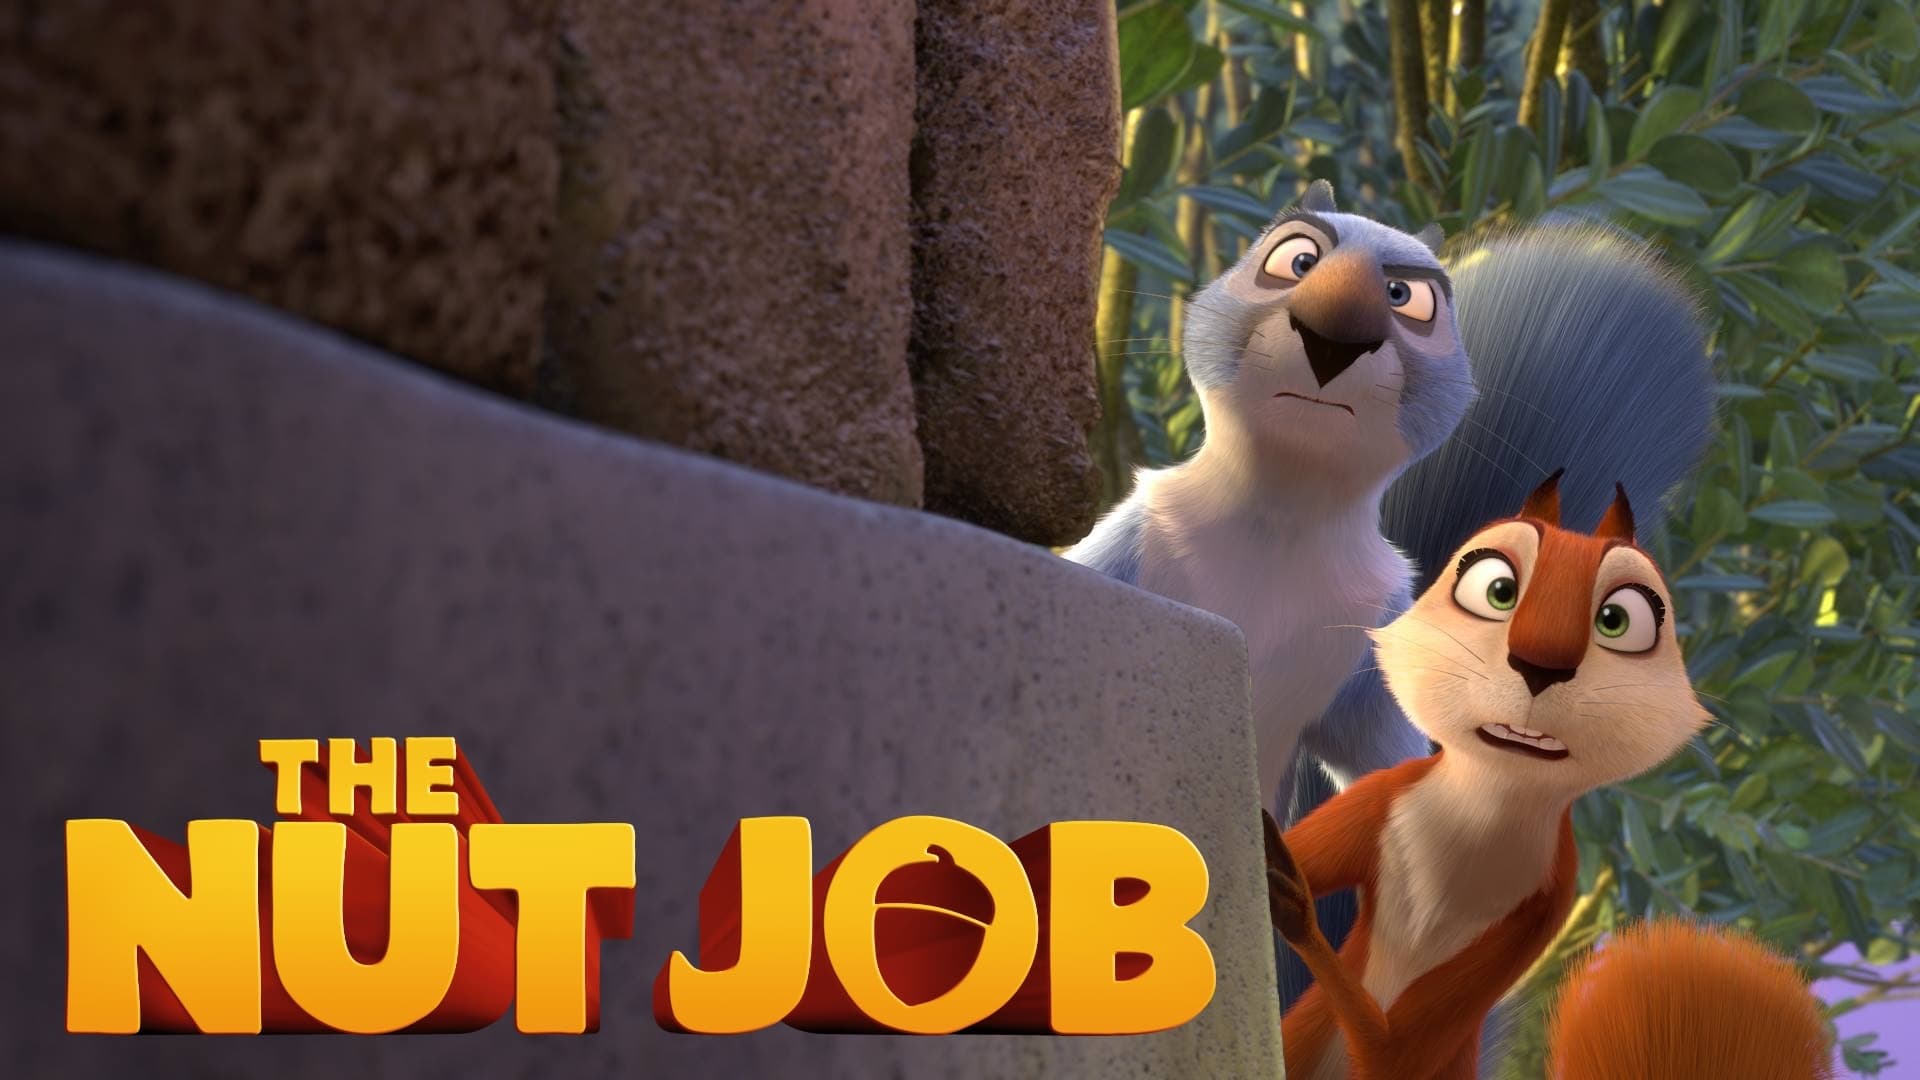 The Nut Job (2014)